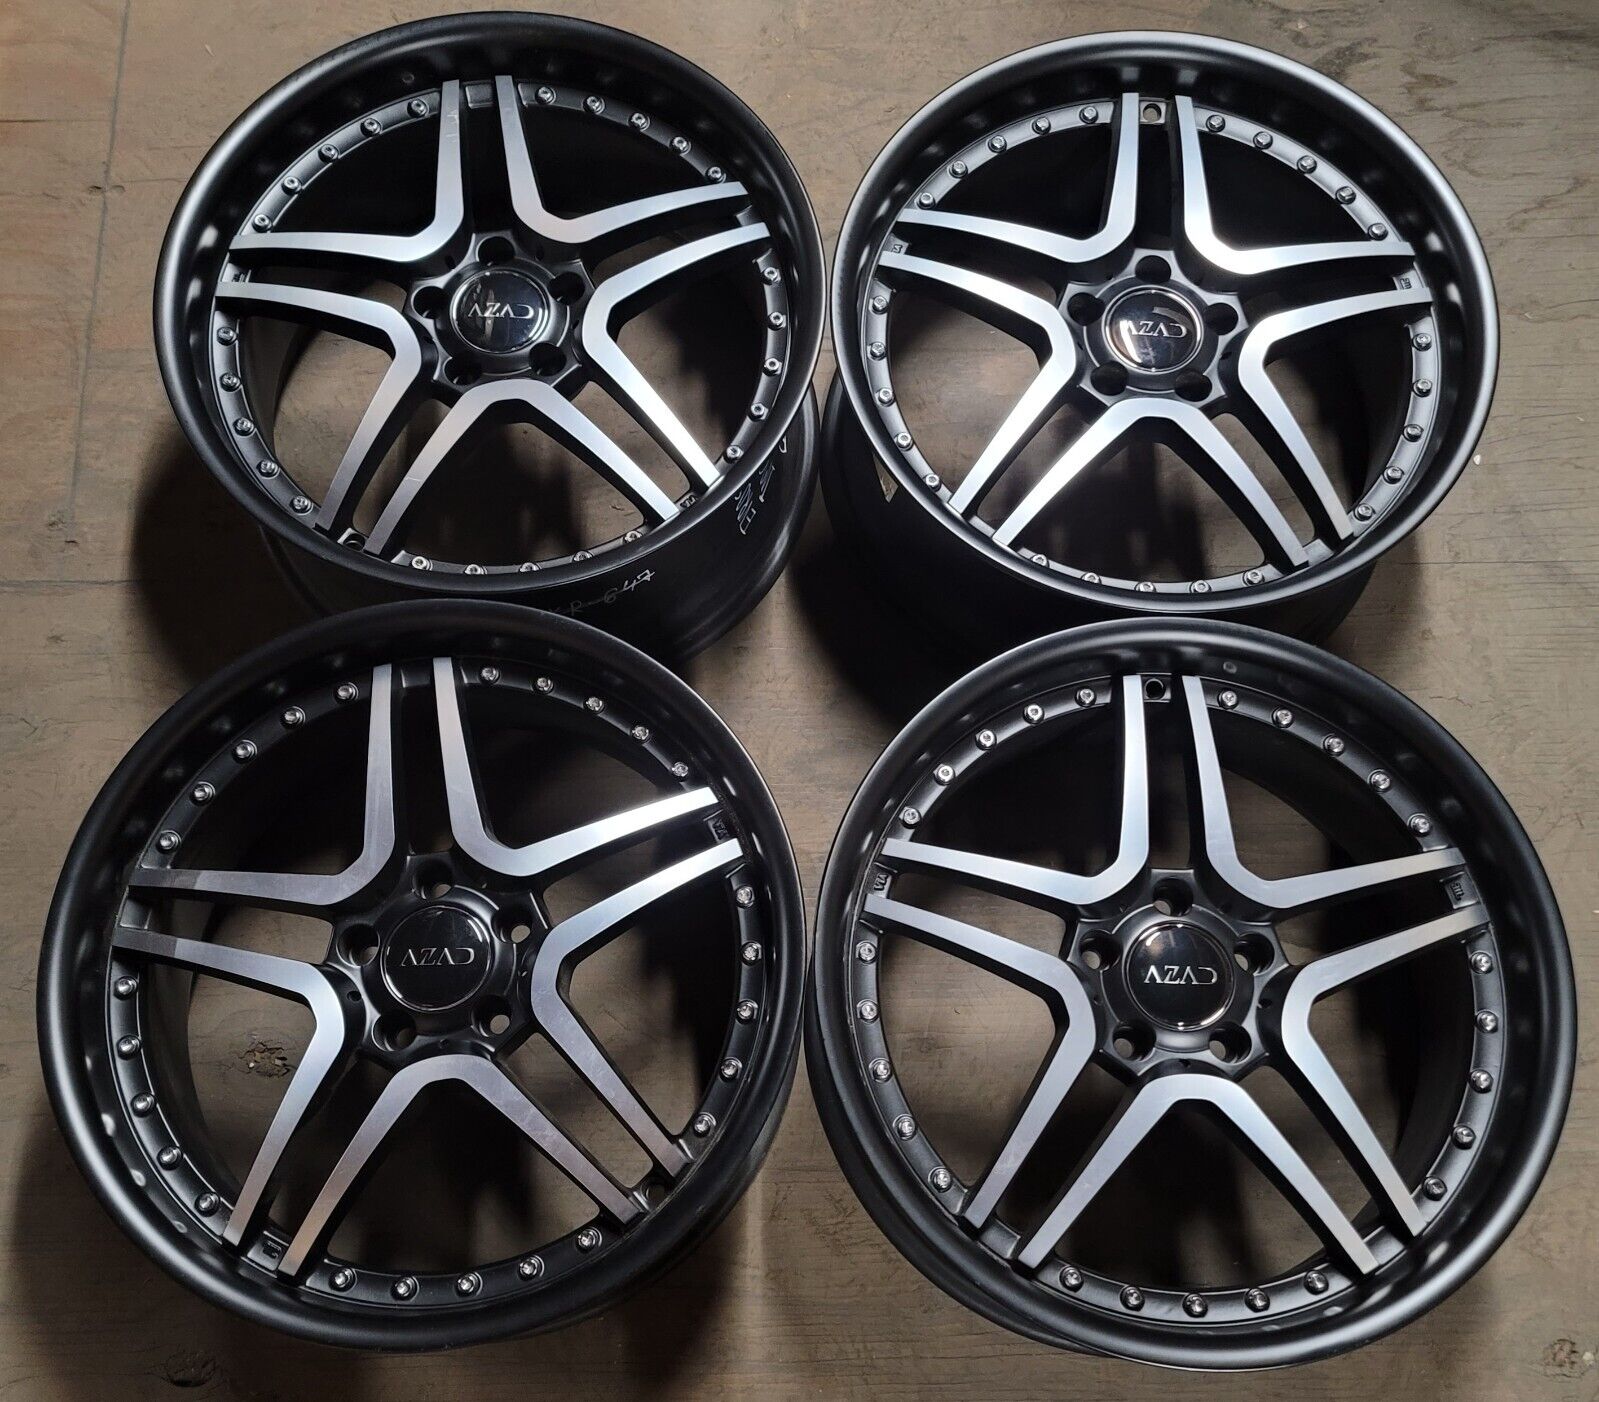 Euro Wheels / Rims 19 inch 5X114.3 +38MM  Black Machine May fit Honda Nissan